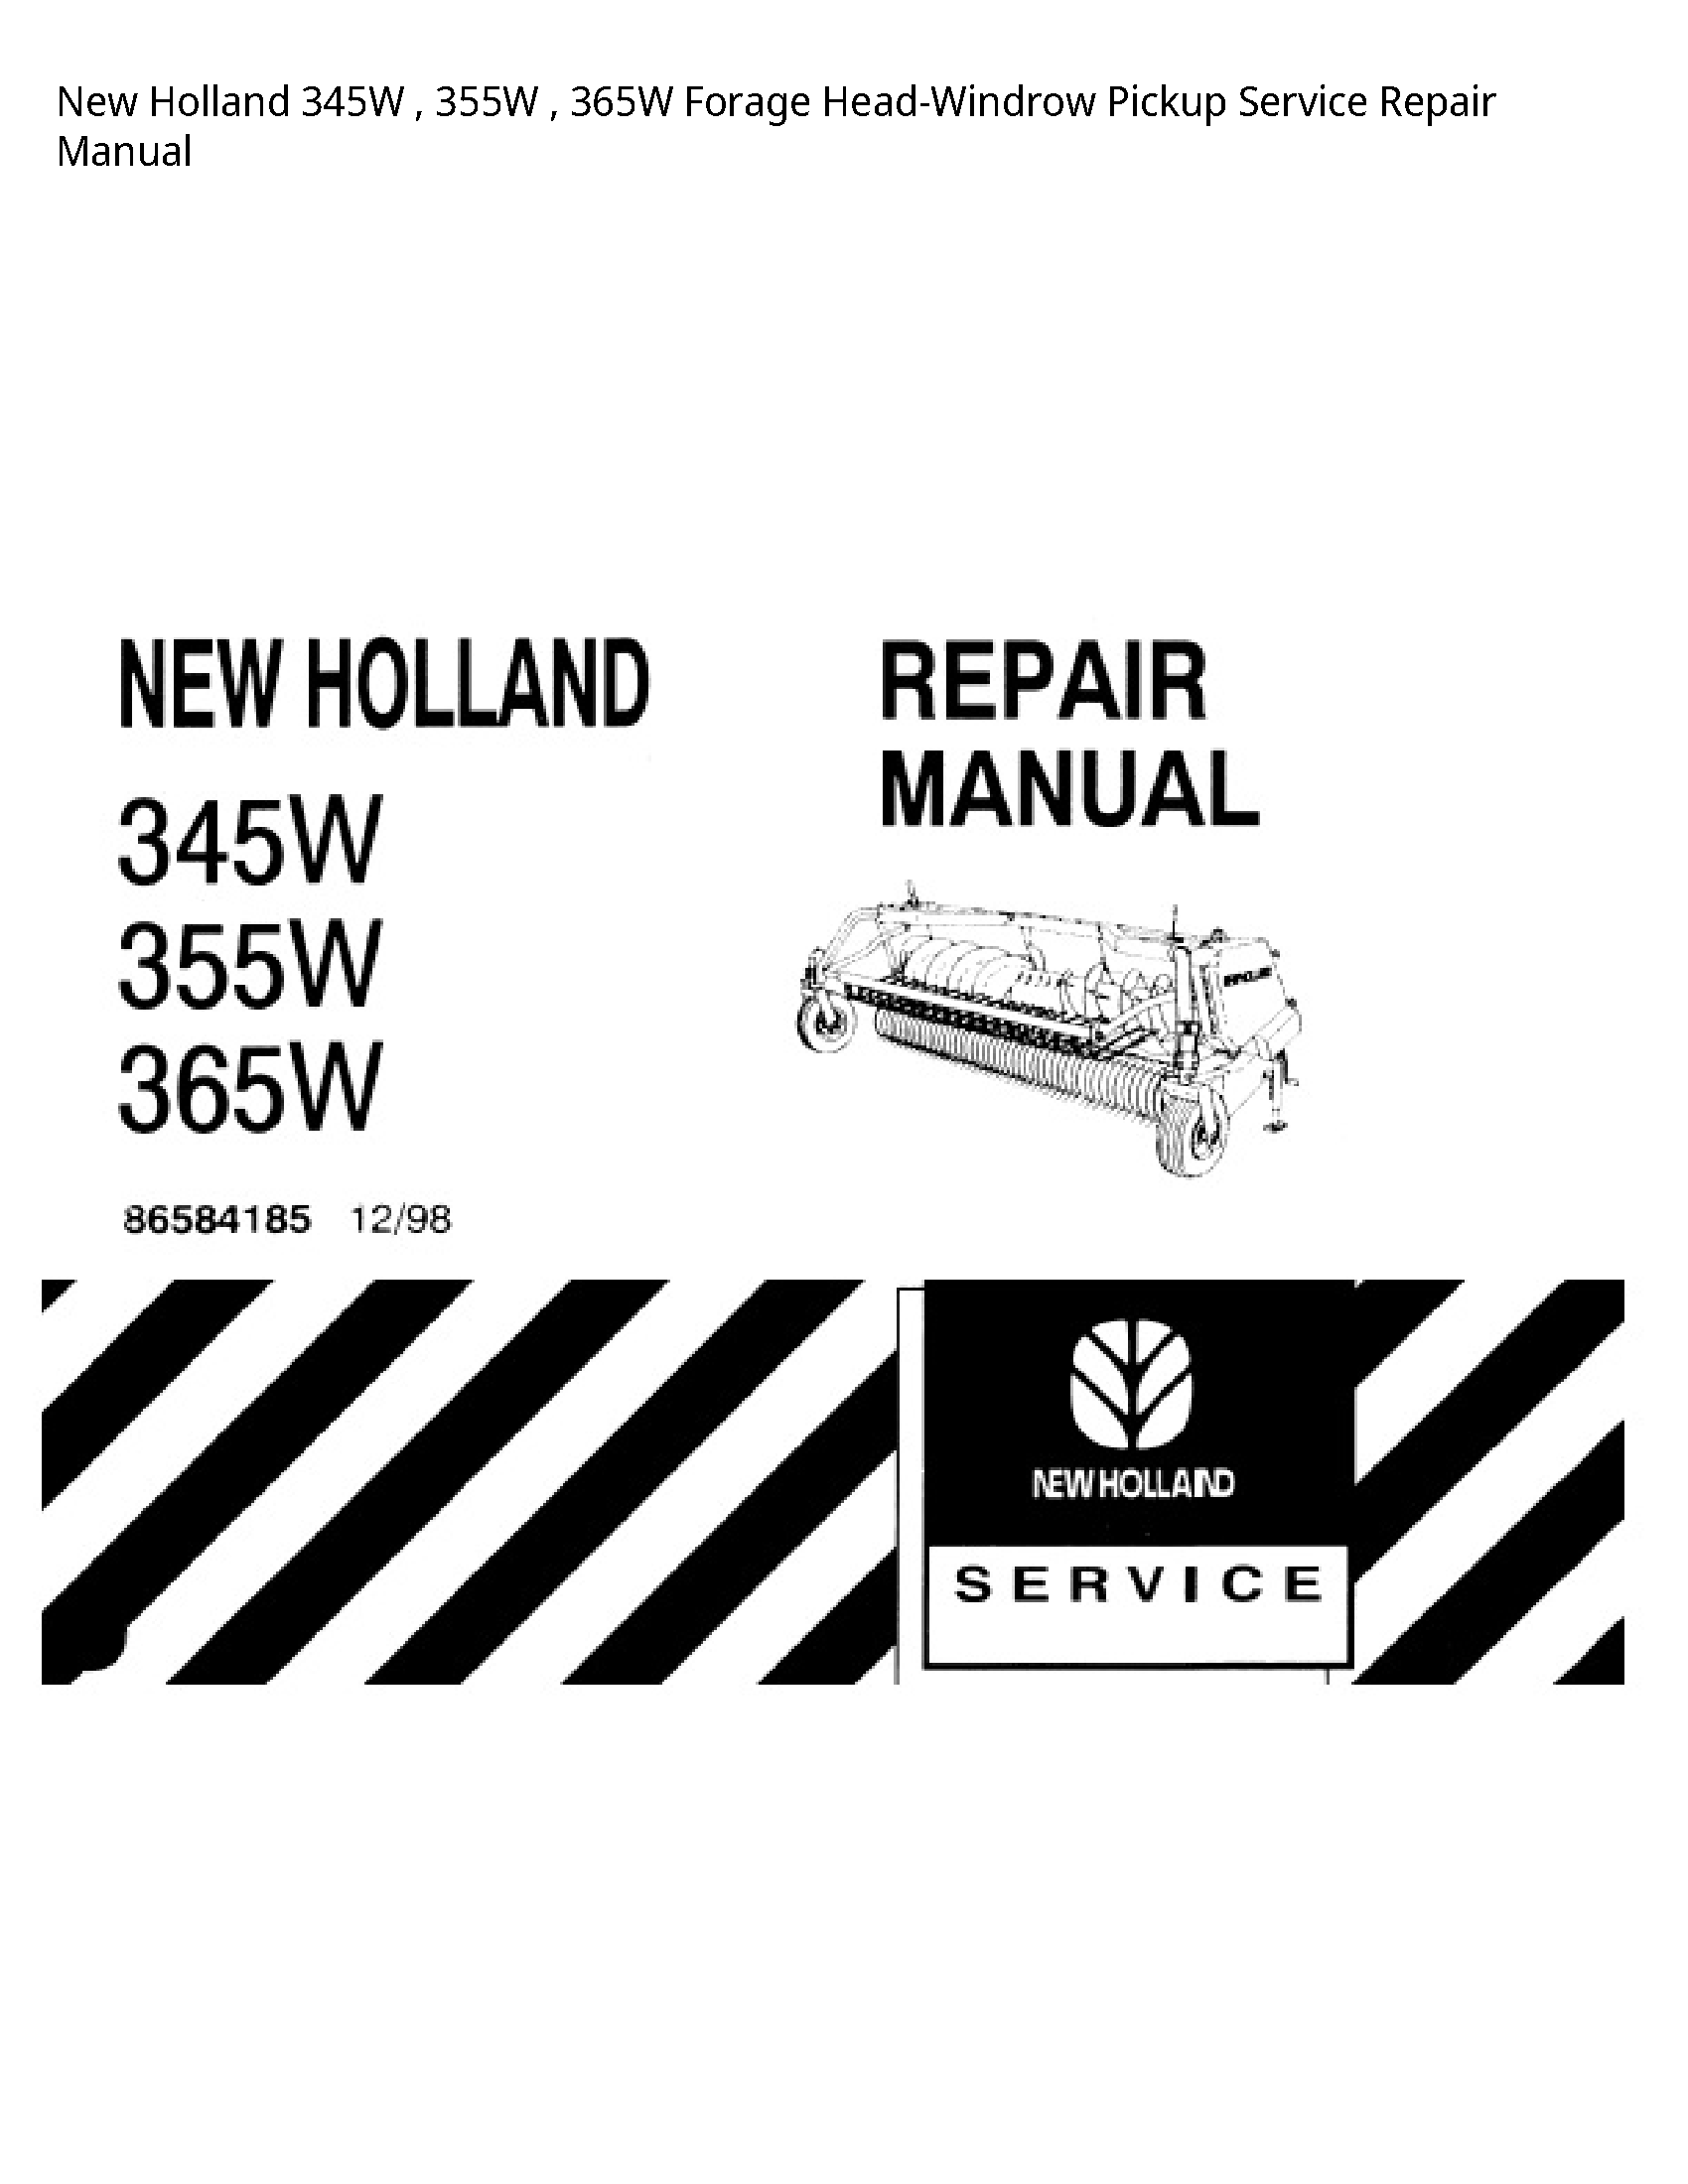 New Holland 345W Forage Head-Windrow Pickup manual